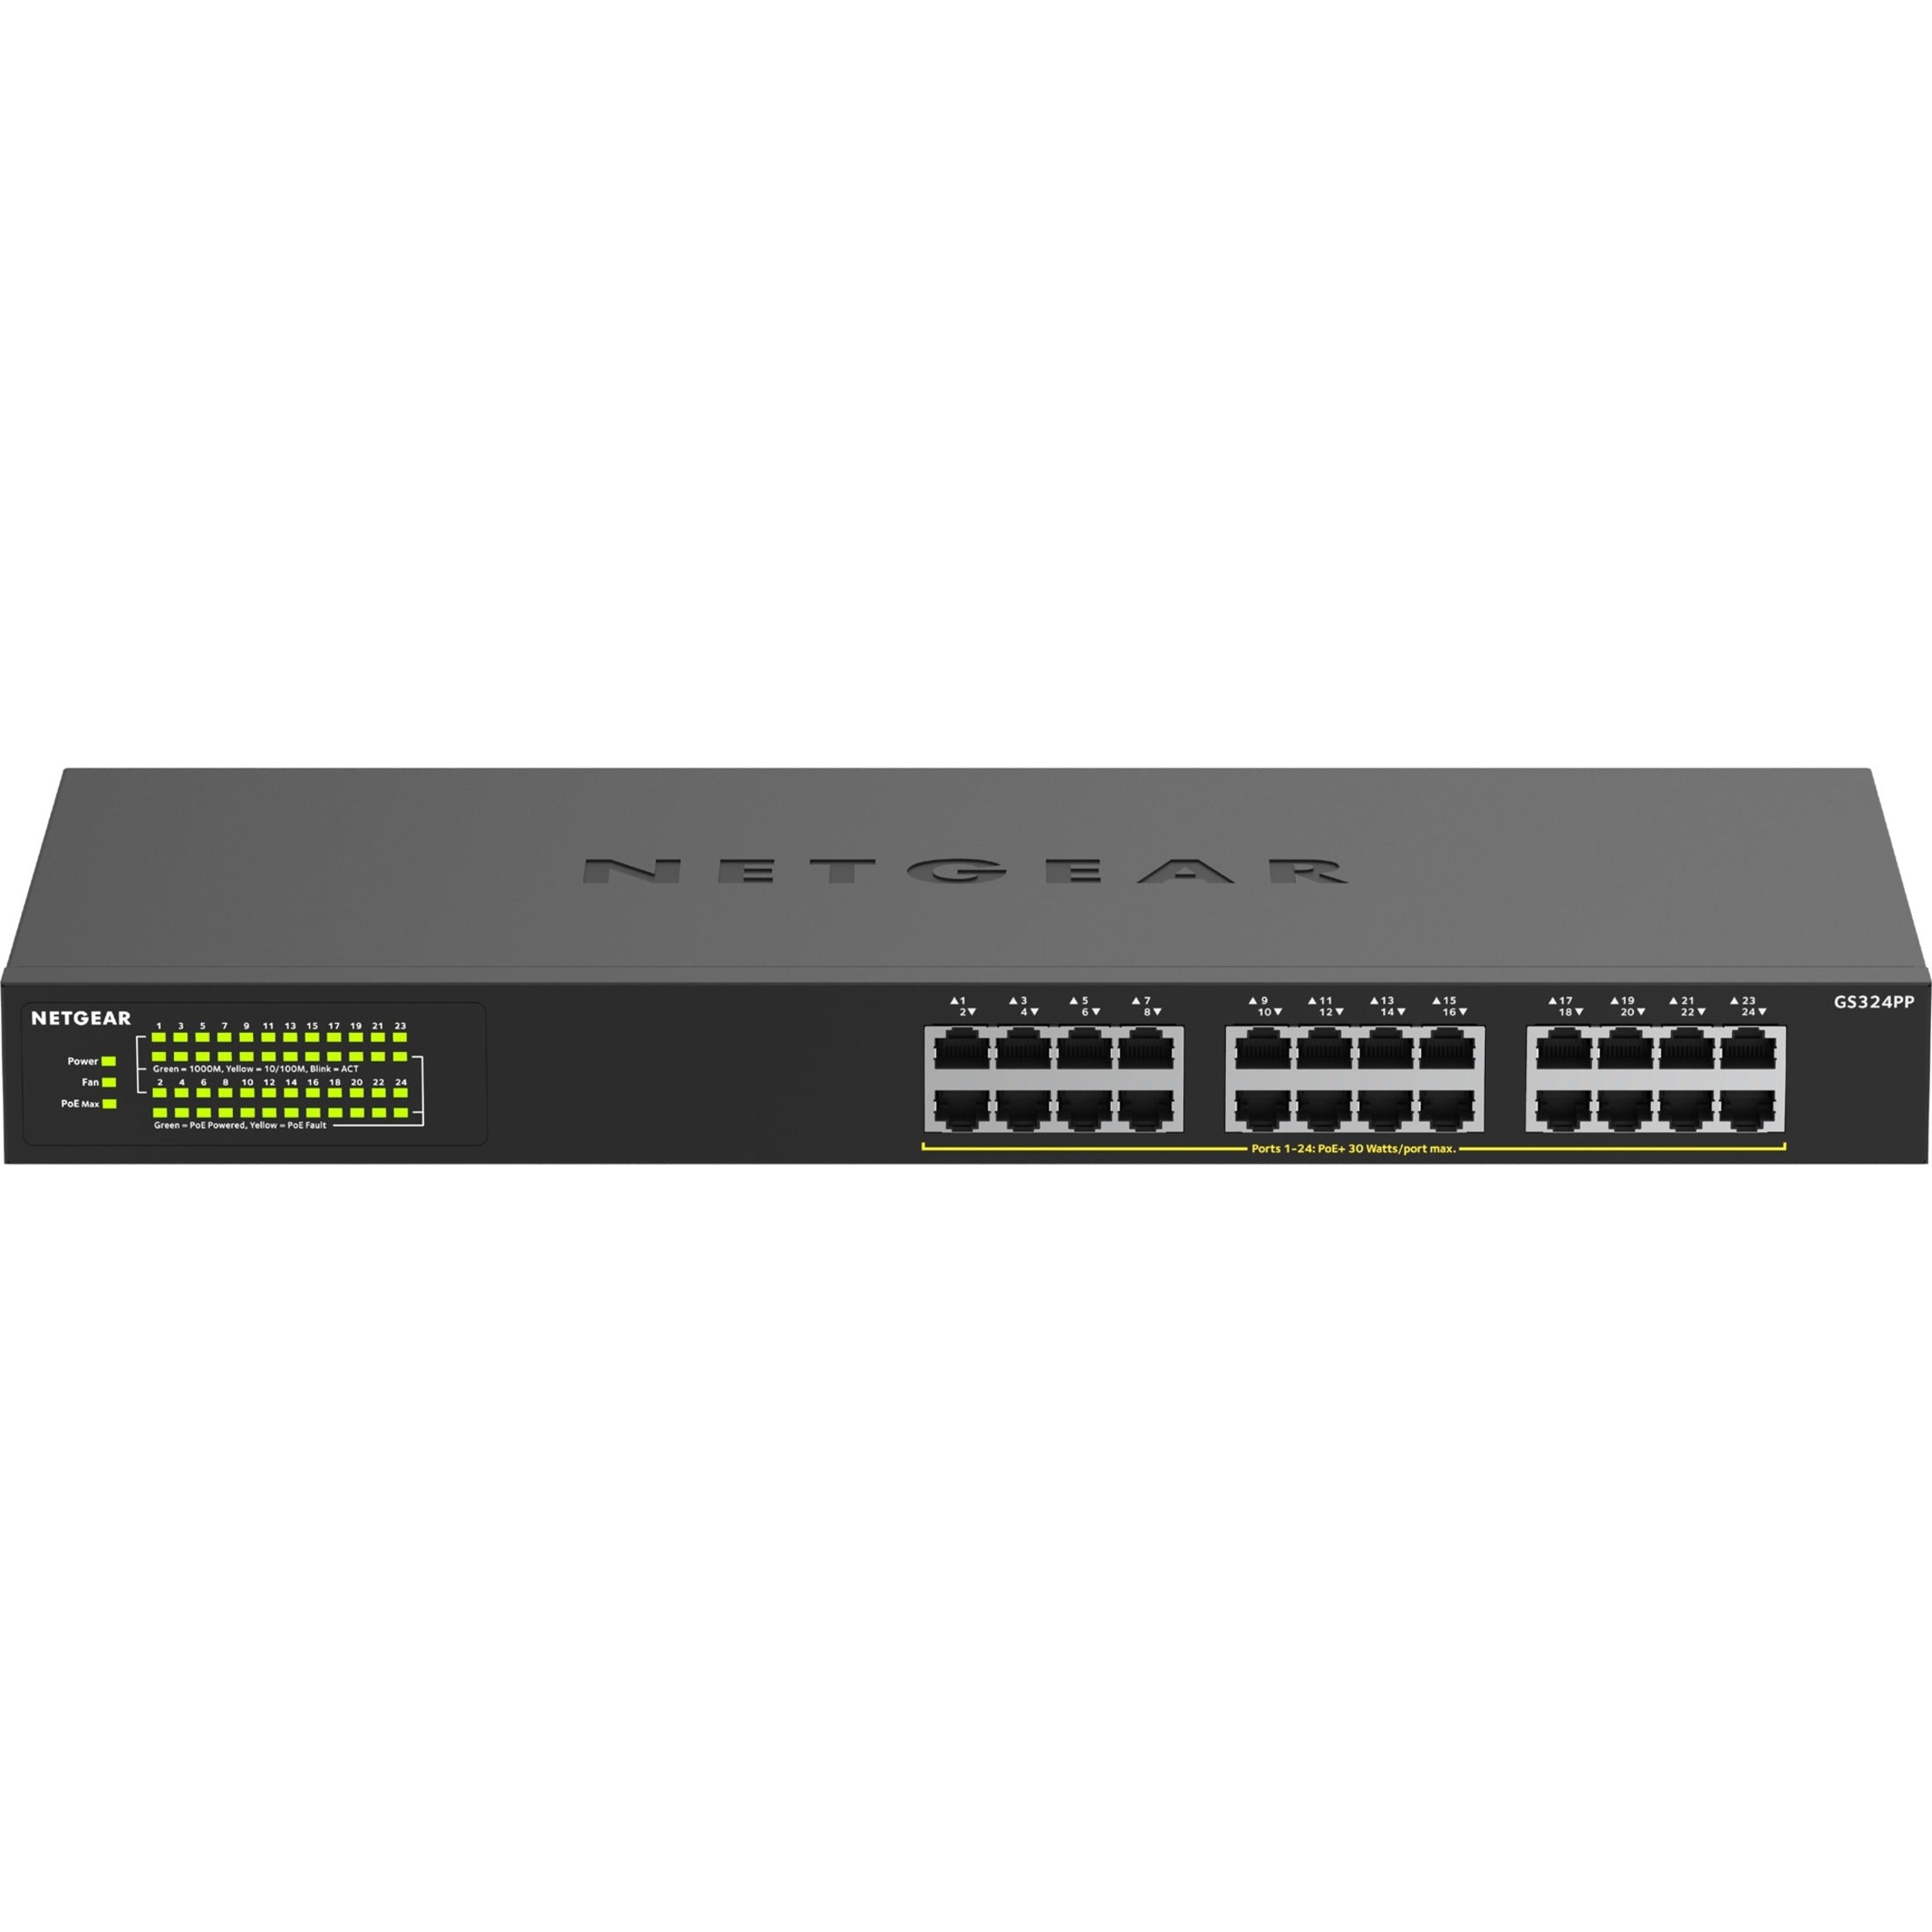 Netgear GS324PP-100NAS GS324PP Ethernet Switch, 24 Port Gigabit Ethernet Network, 3 Year Warranty, RoHS, REACH, WEEE, ErP Certified [Discontinued]